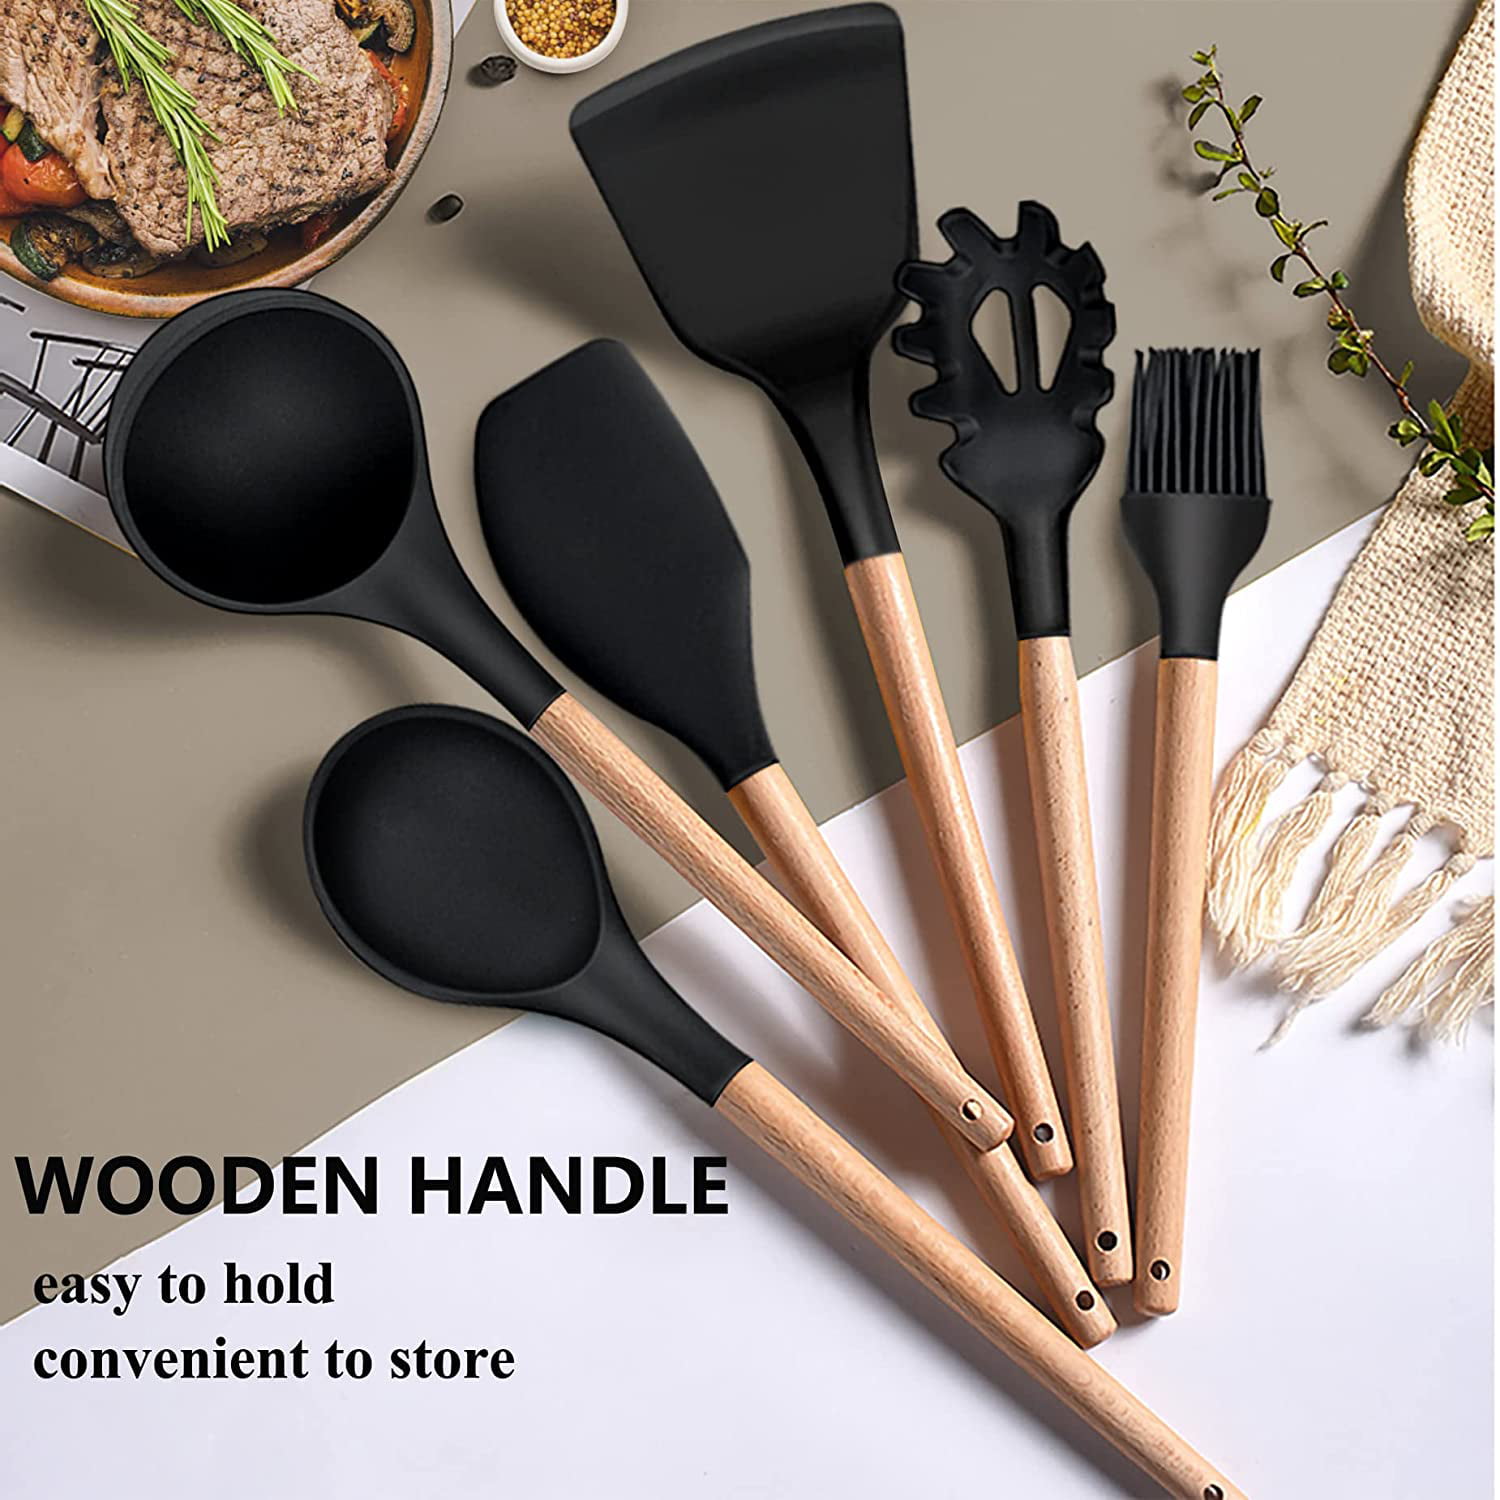 Webake Wooden Handle Silicone Non Stick Kitchen Cooking Utensils Set with  Holder